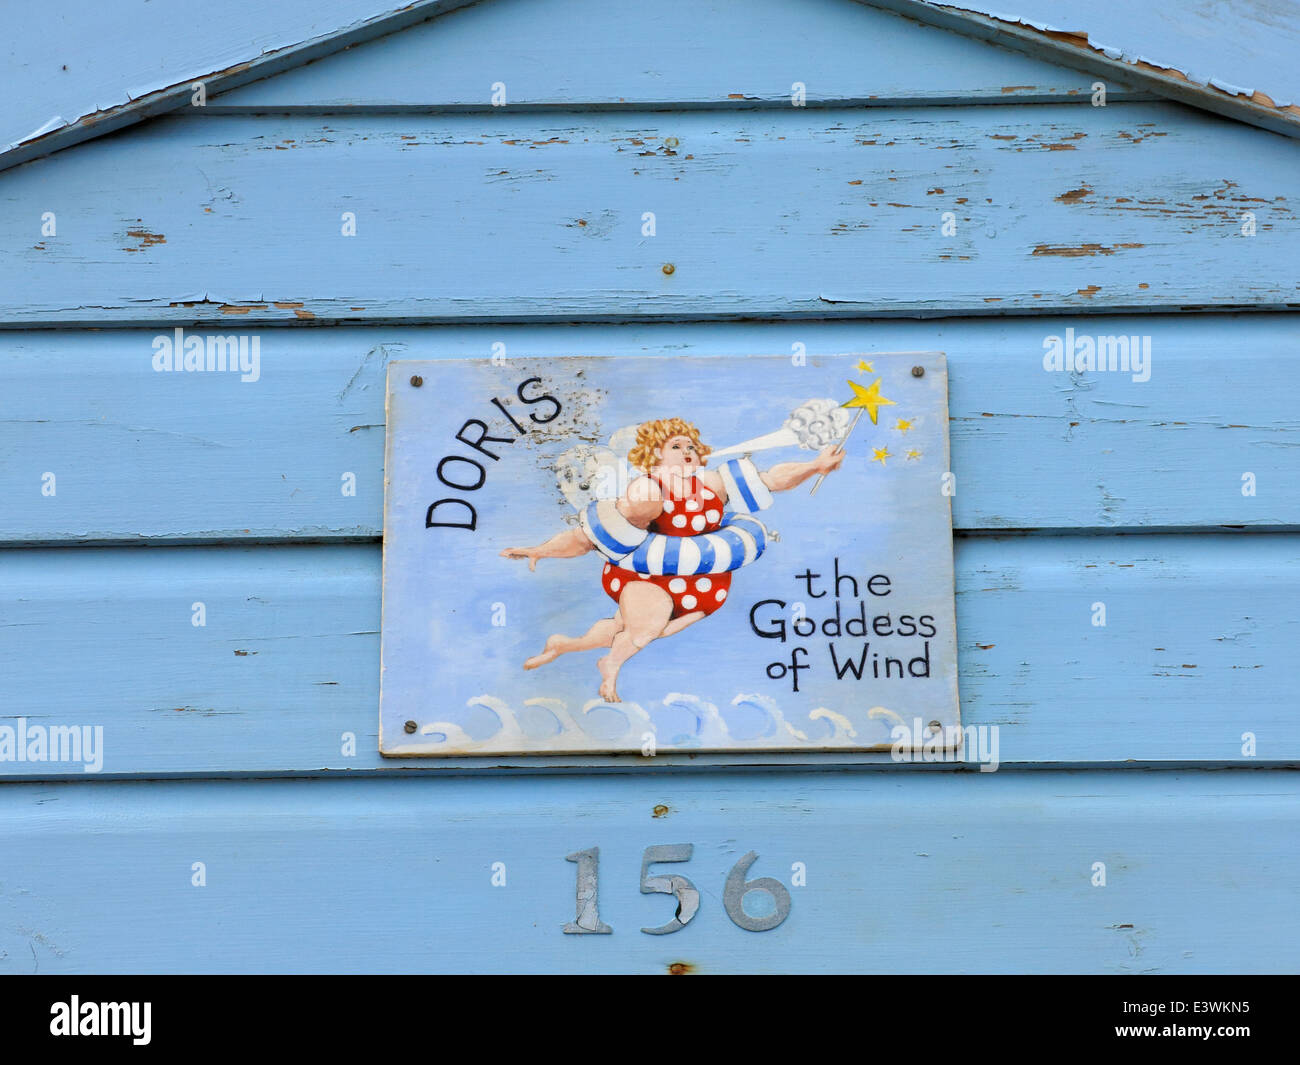 A humorous beach hut sign. Doris - the Goddess of Wind. Stock Photo